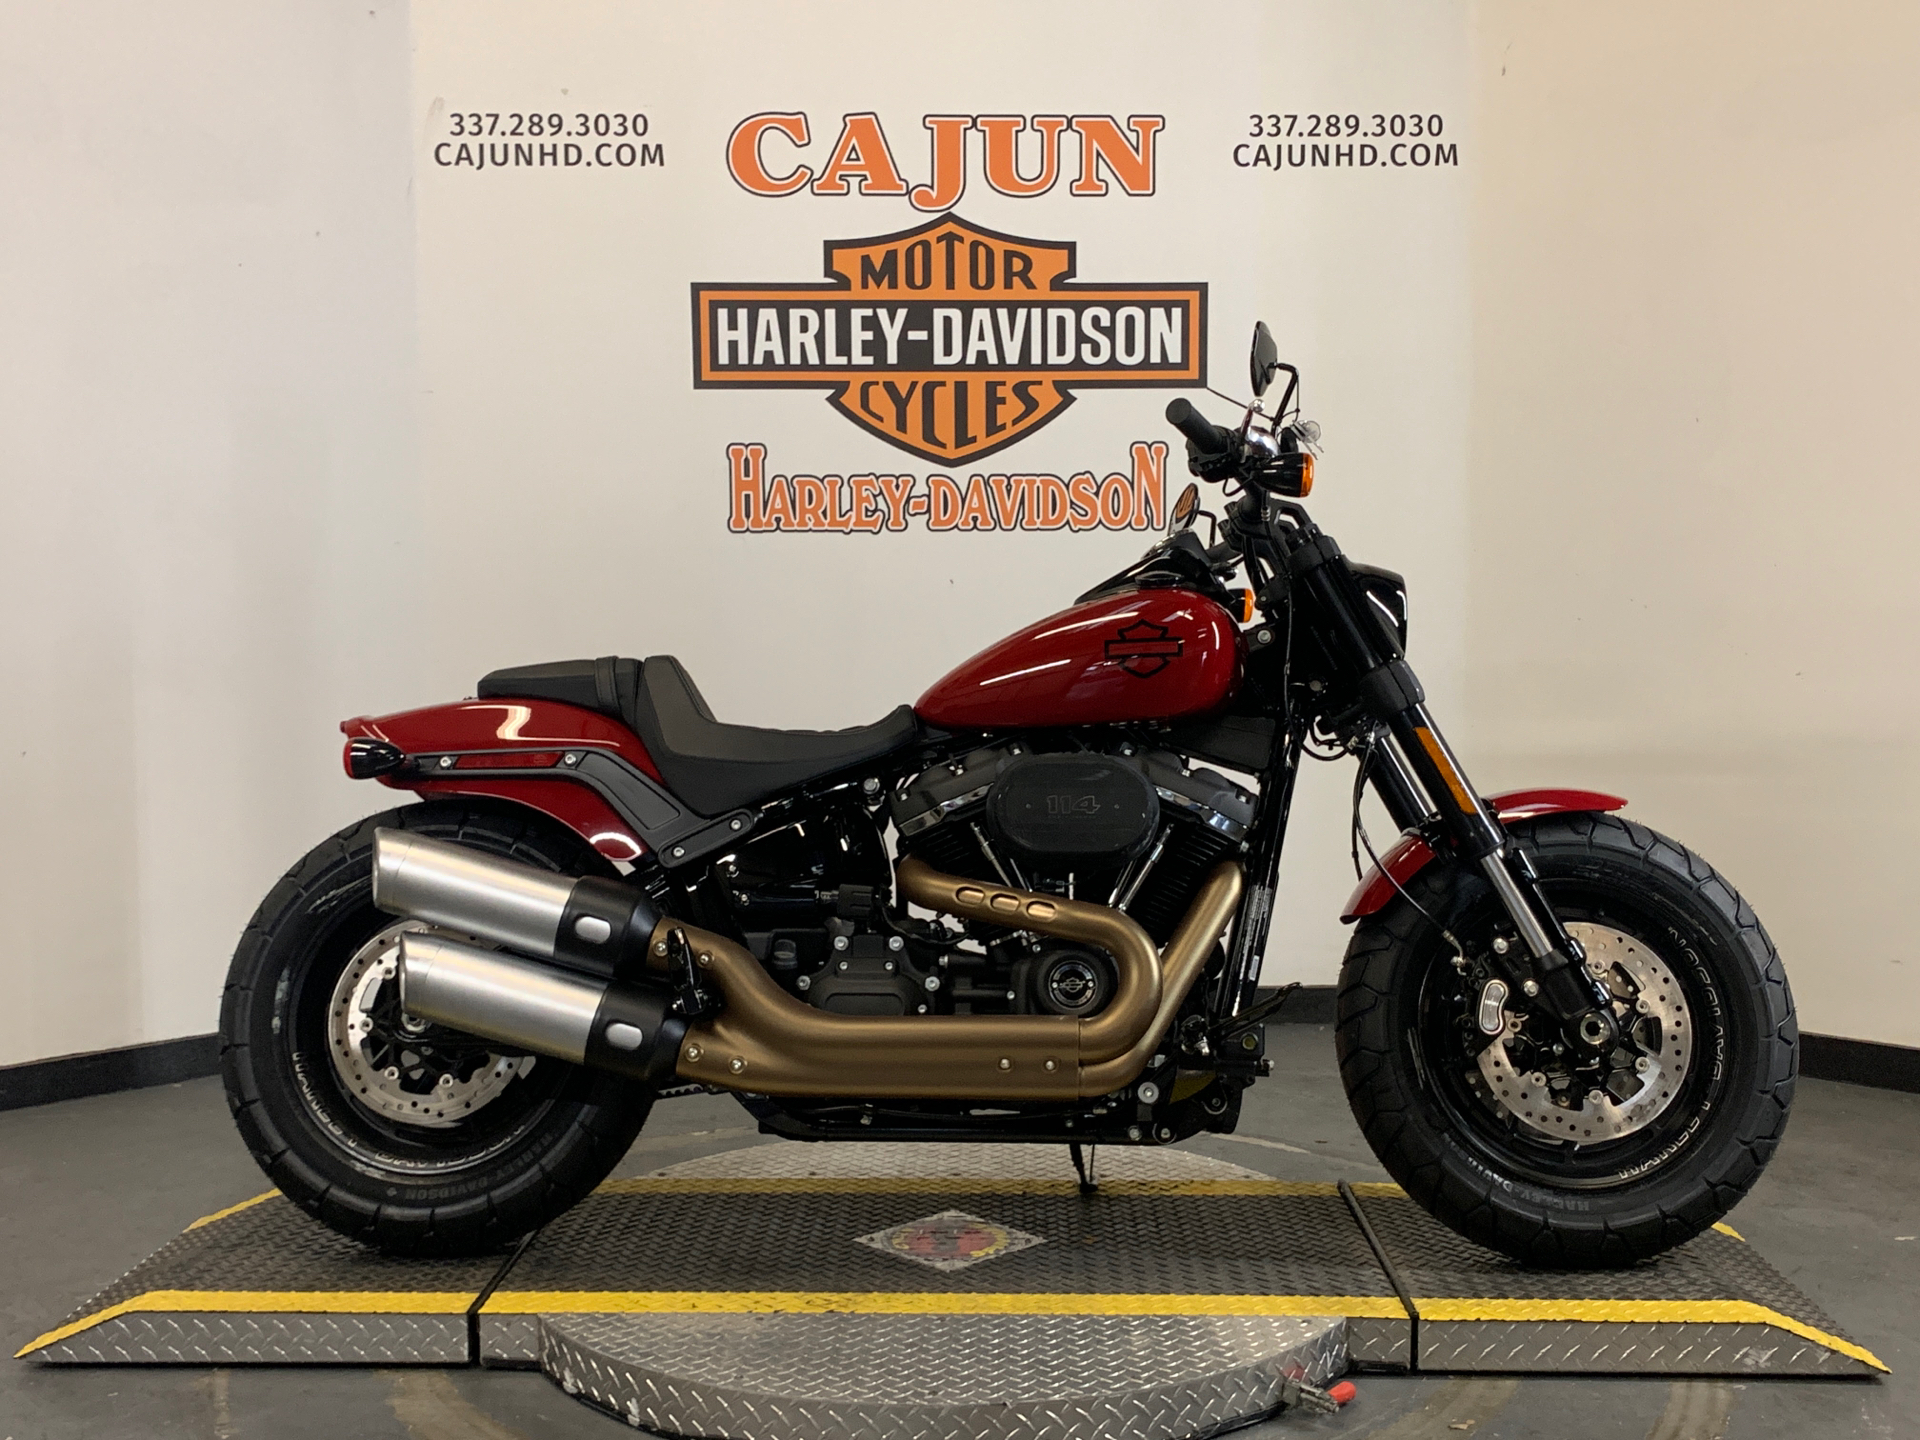 New 2021 Harley Davidson Fat Bob 114 Billiard Red Motorcycles In Scott La 016461